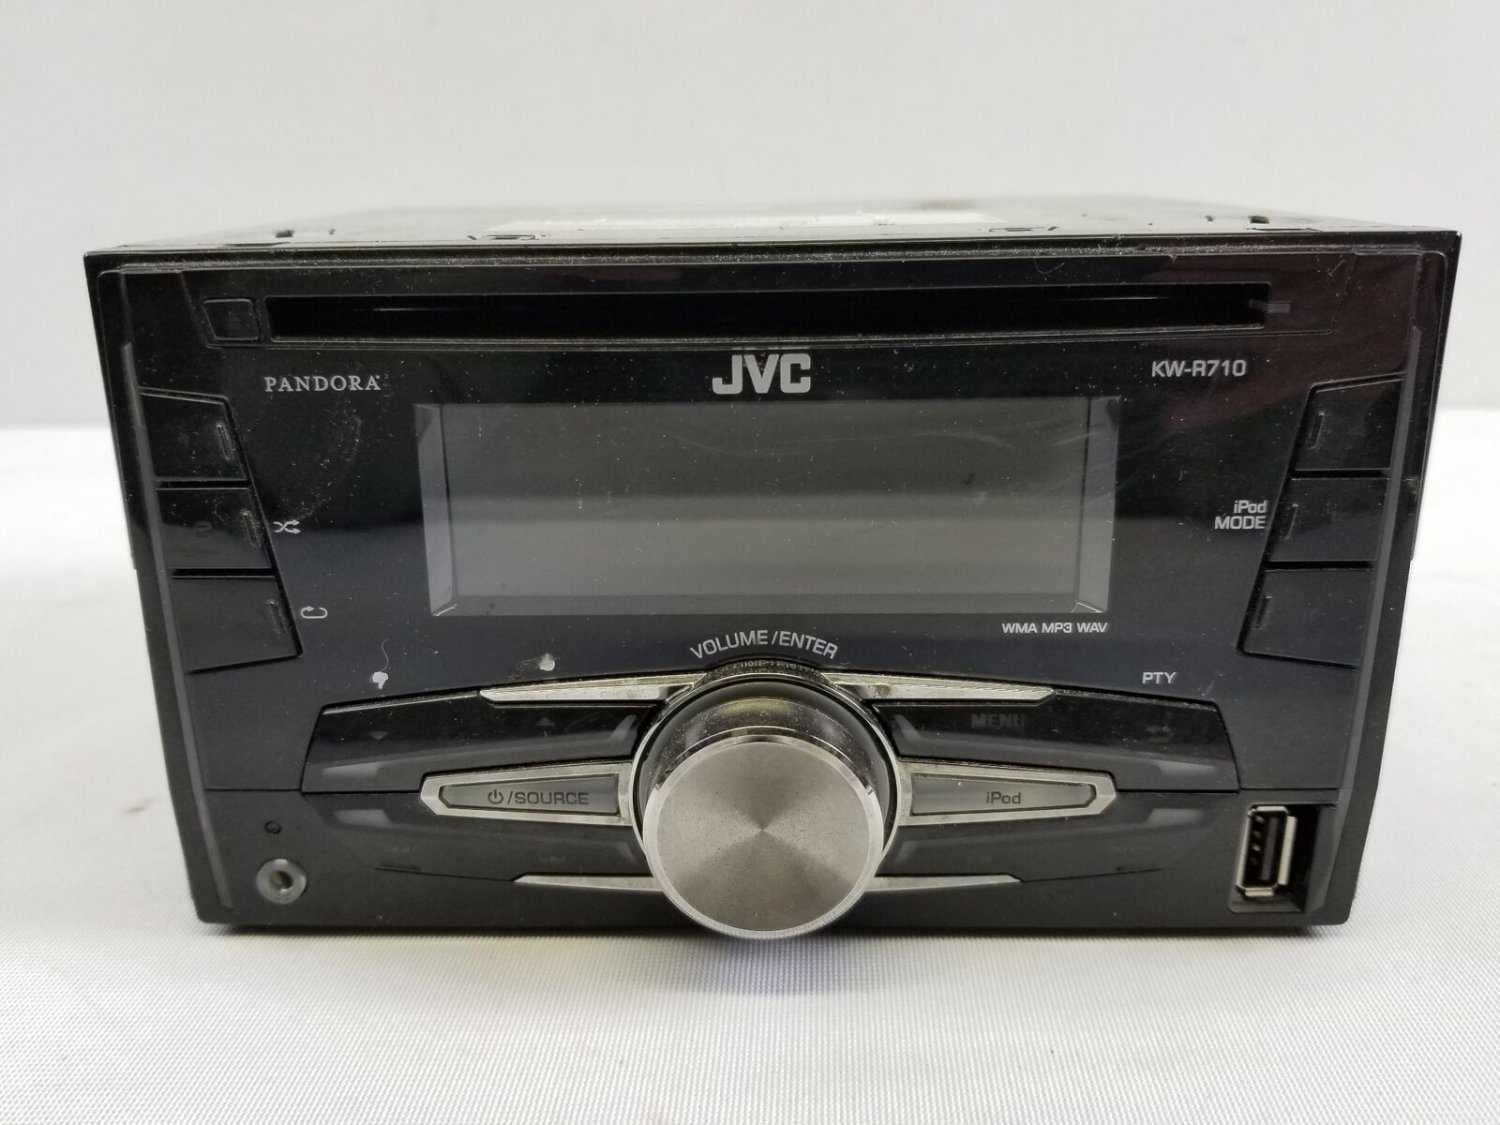 installation manual jvc pandora radio